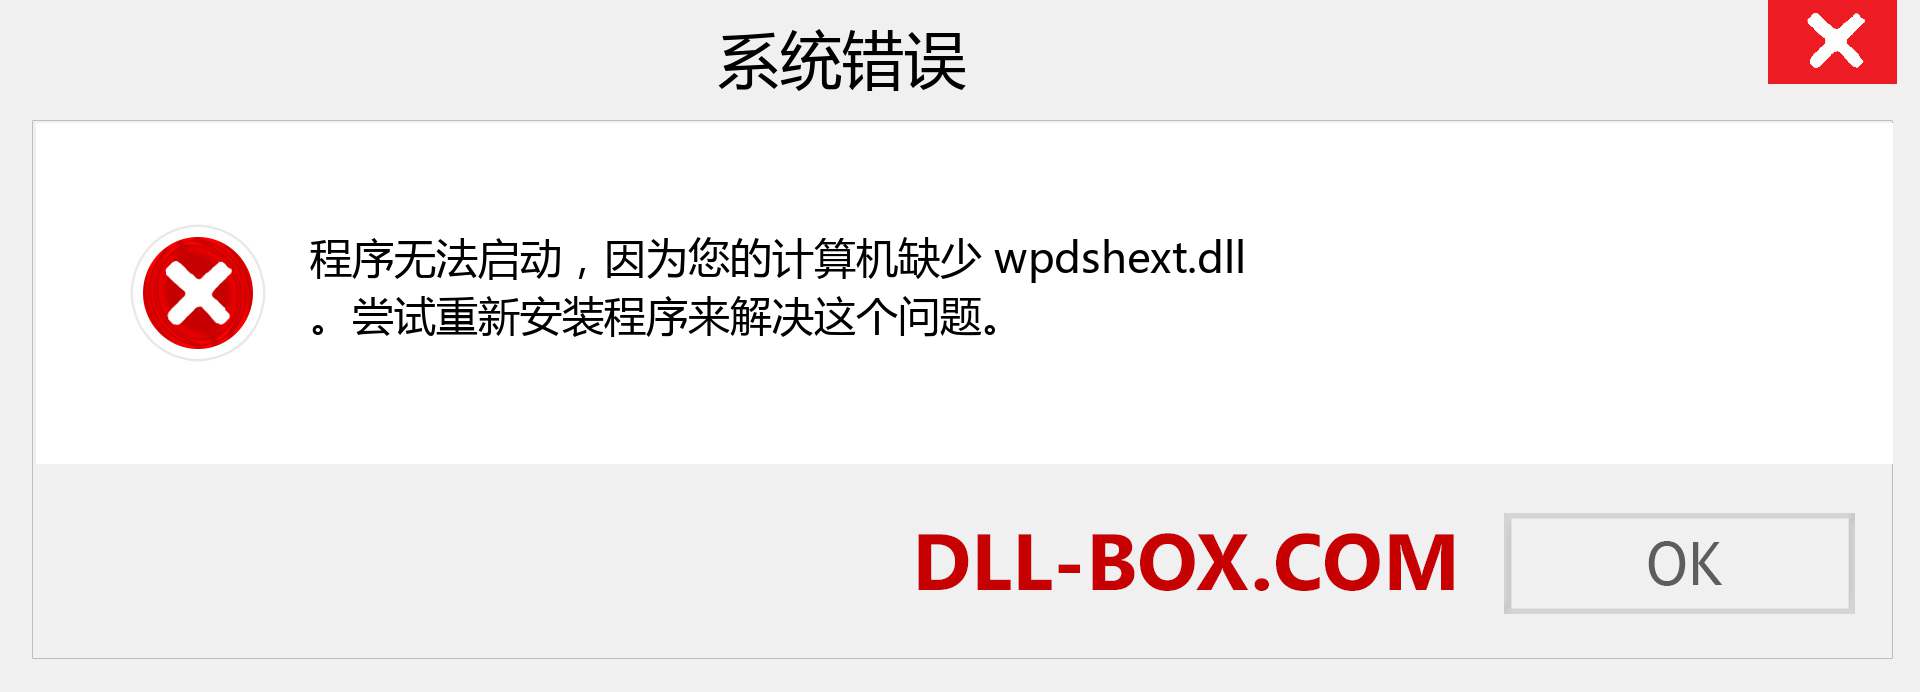 wpdshext.dll 文件丢失？。 适用于 Windows 7、8、10 的下载 - 修复 Windows、照片、图像上的 wpdshext dll 丢失错误